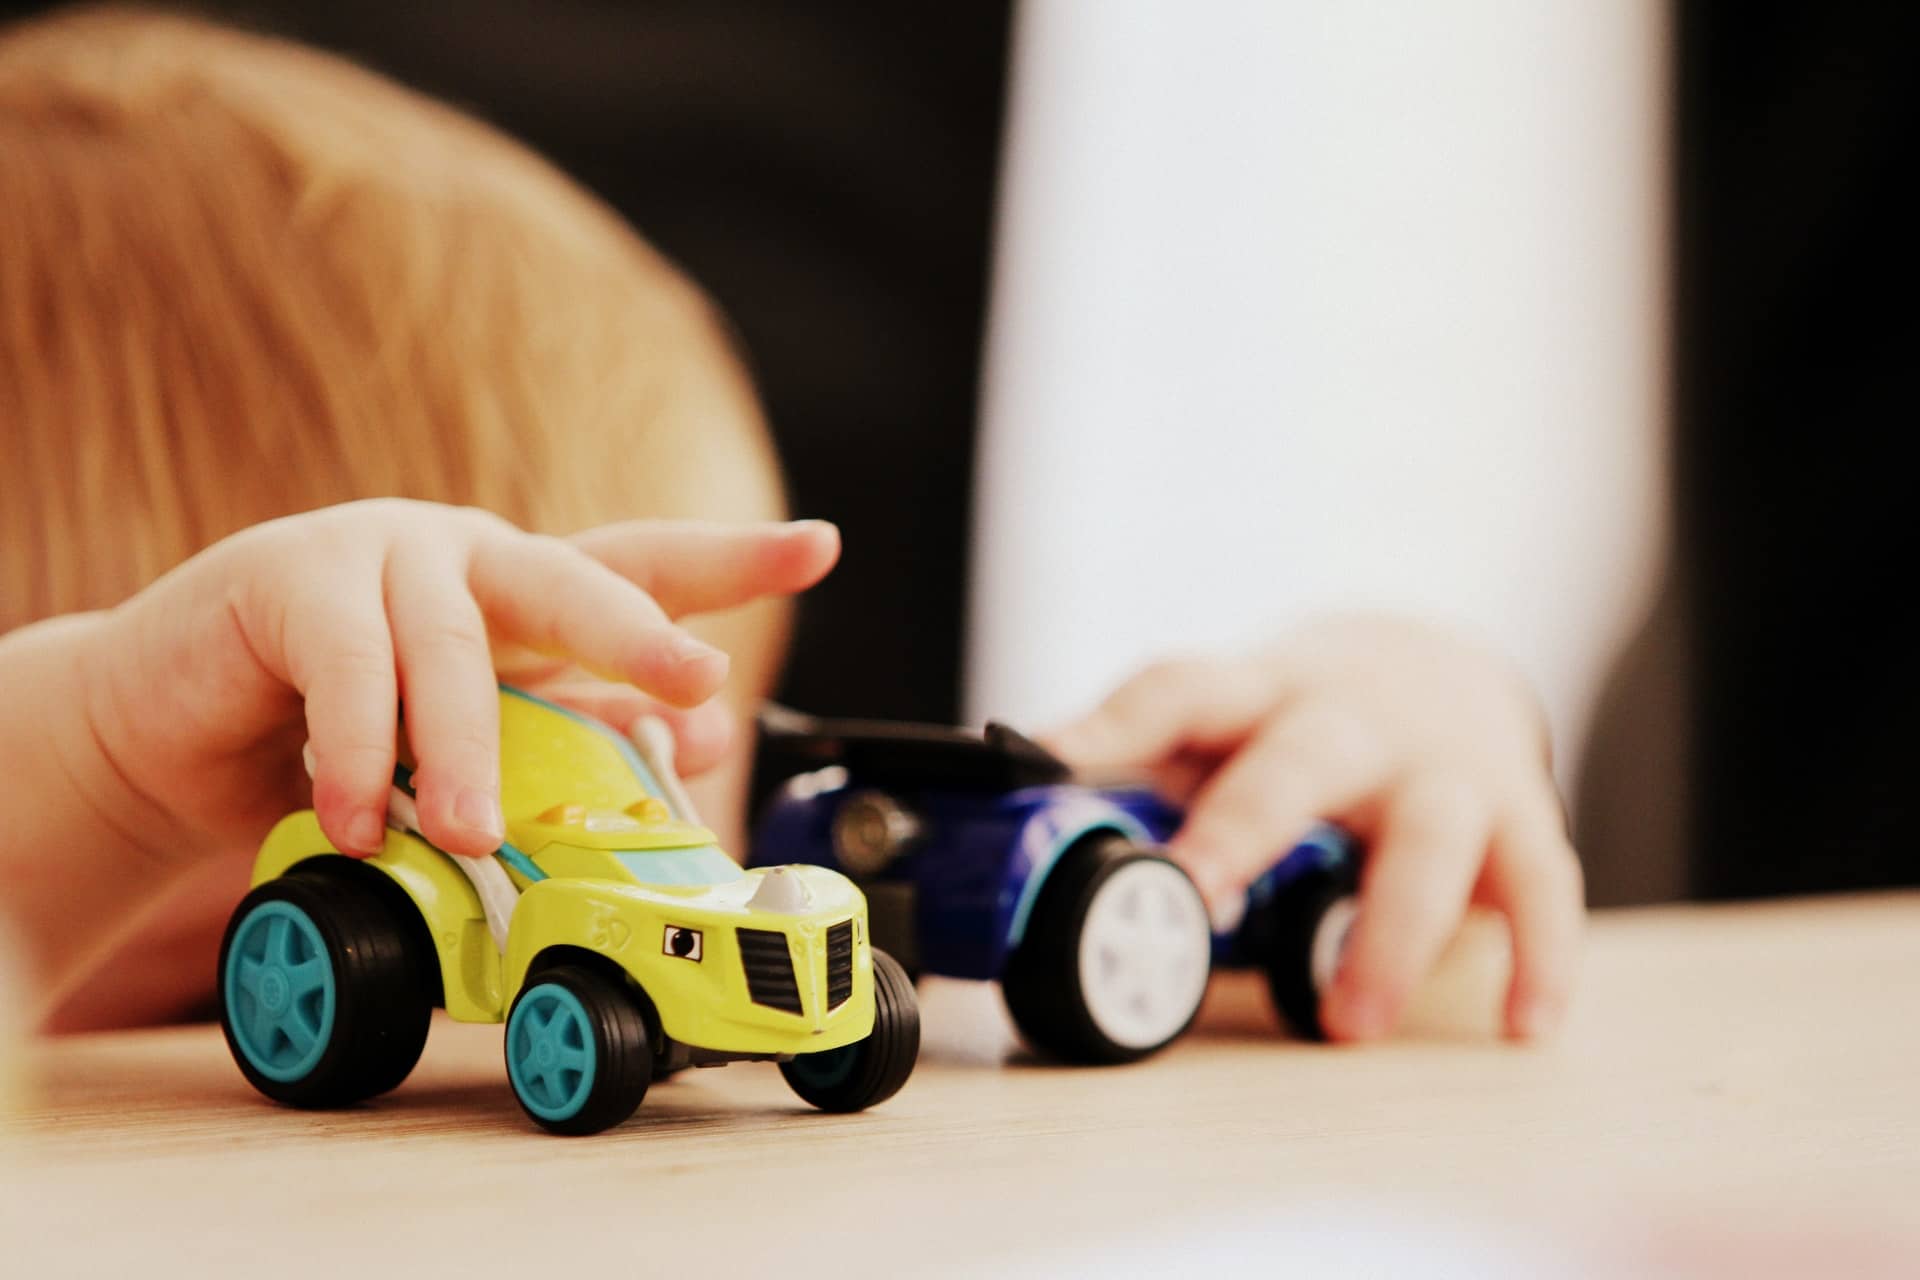 sandy millar nuS2GDpCDoI unsplash - The Importance Of Toys In A Child's Development